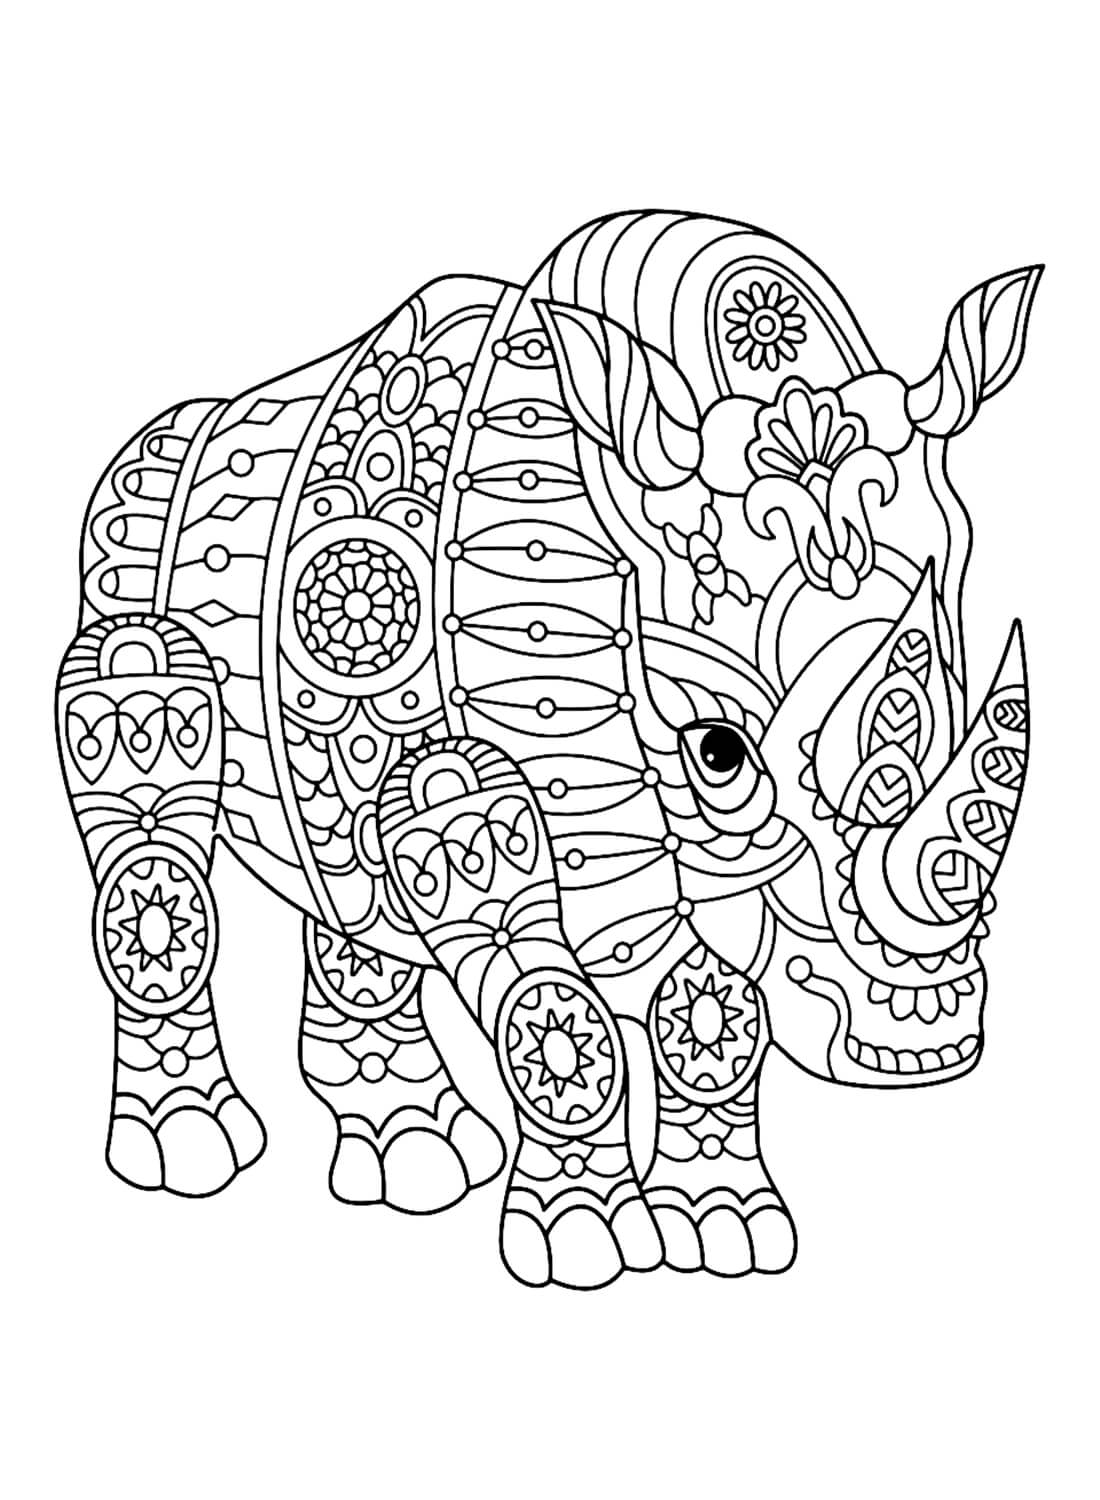 Mandala Rhino Coloring Page - Sheet 3 Mandalas